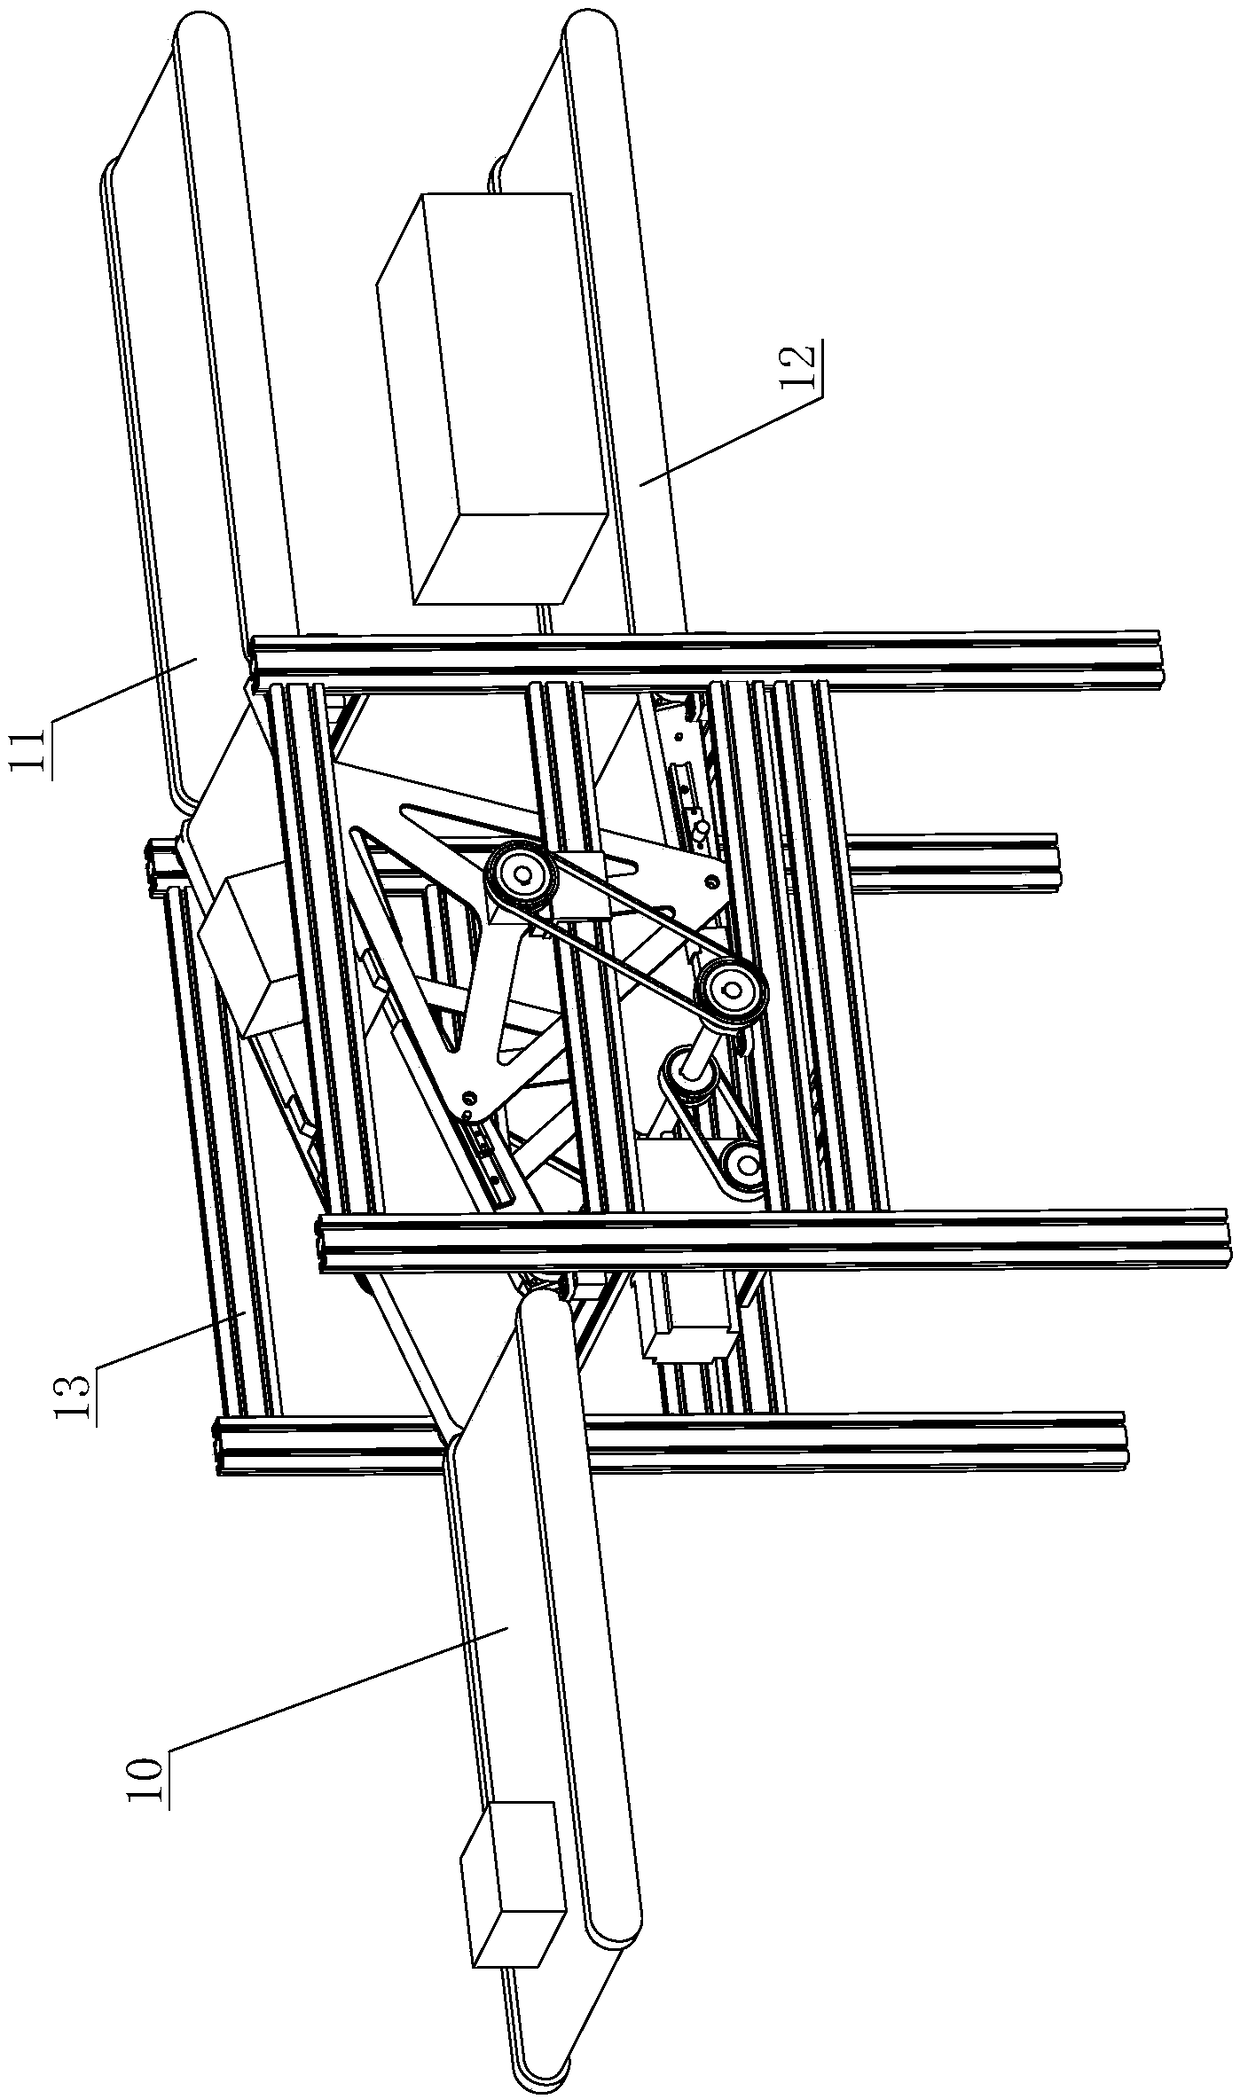 Linked swing arm conveying mechanism of distributing conveyor line